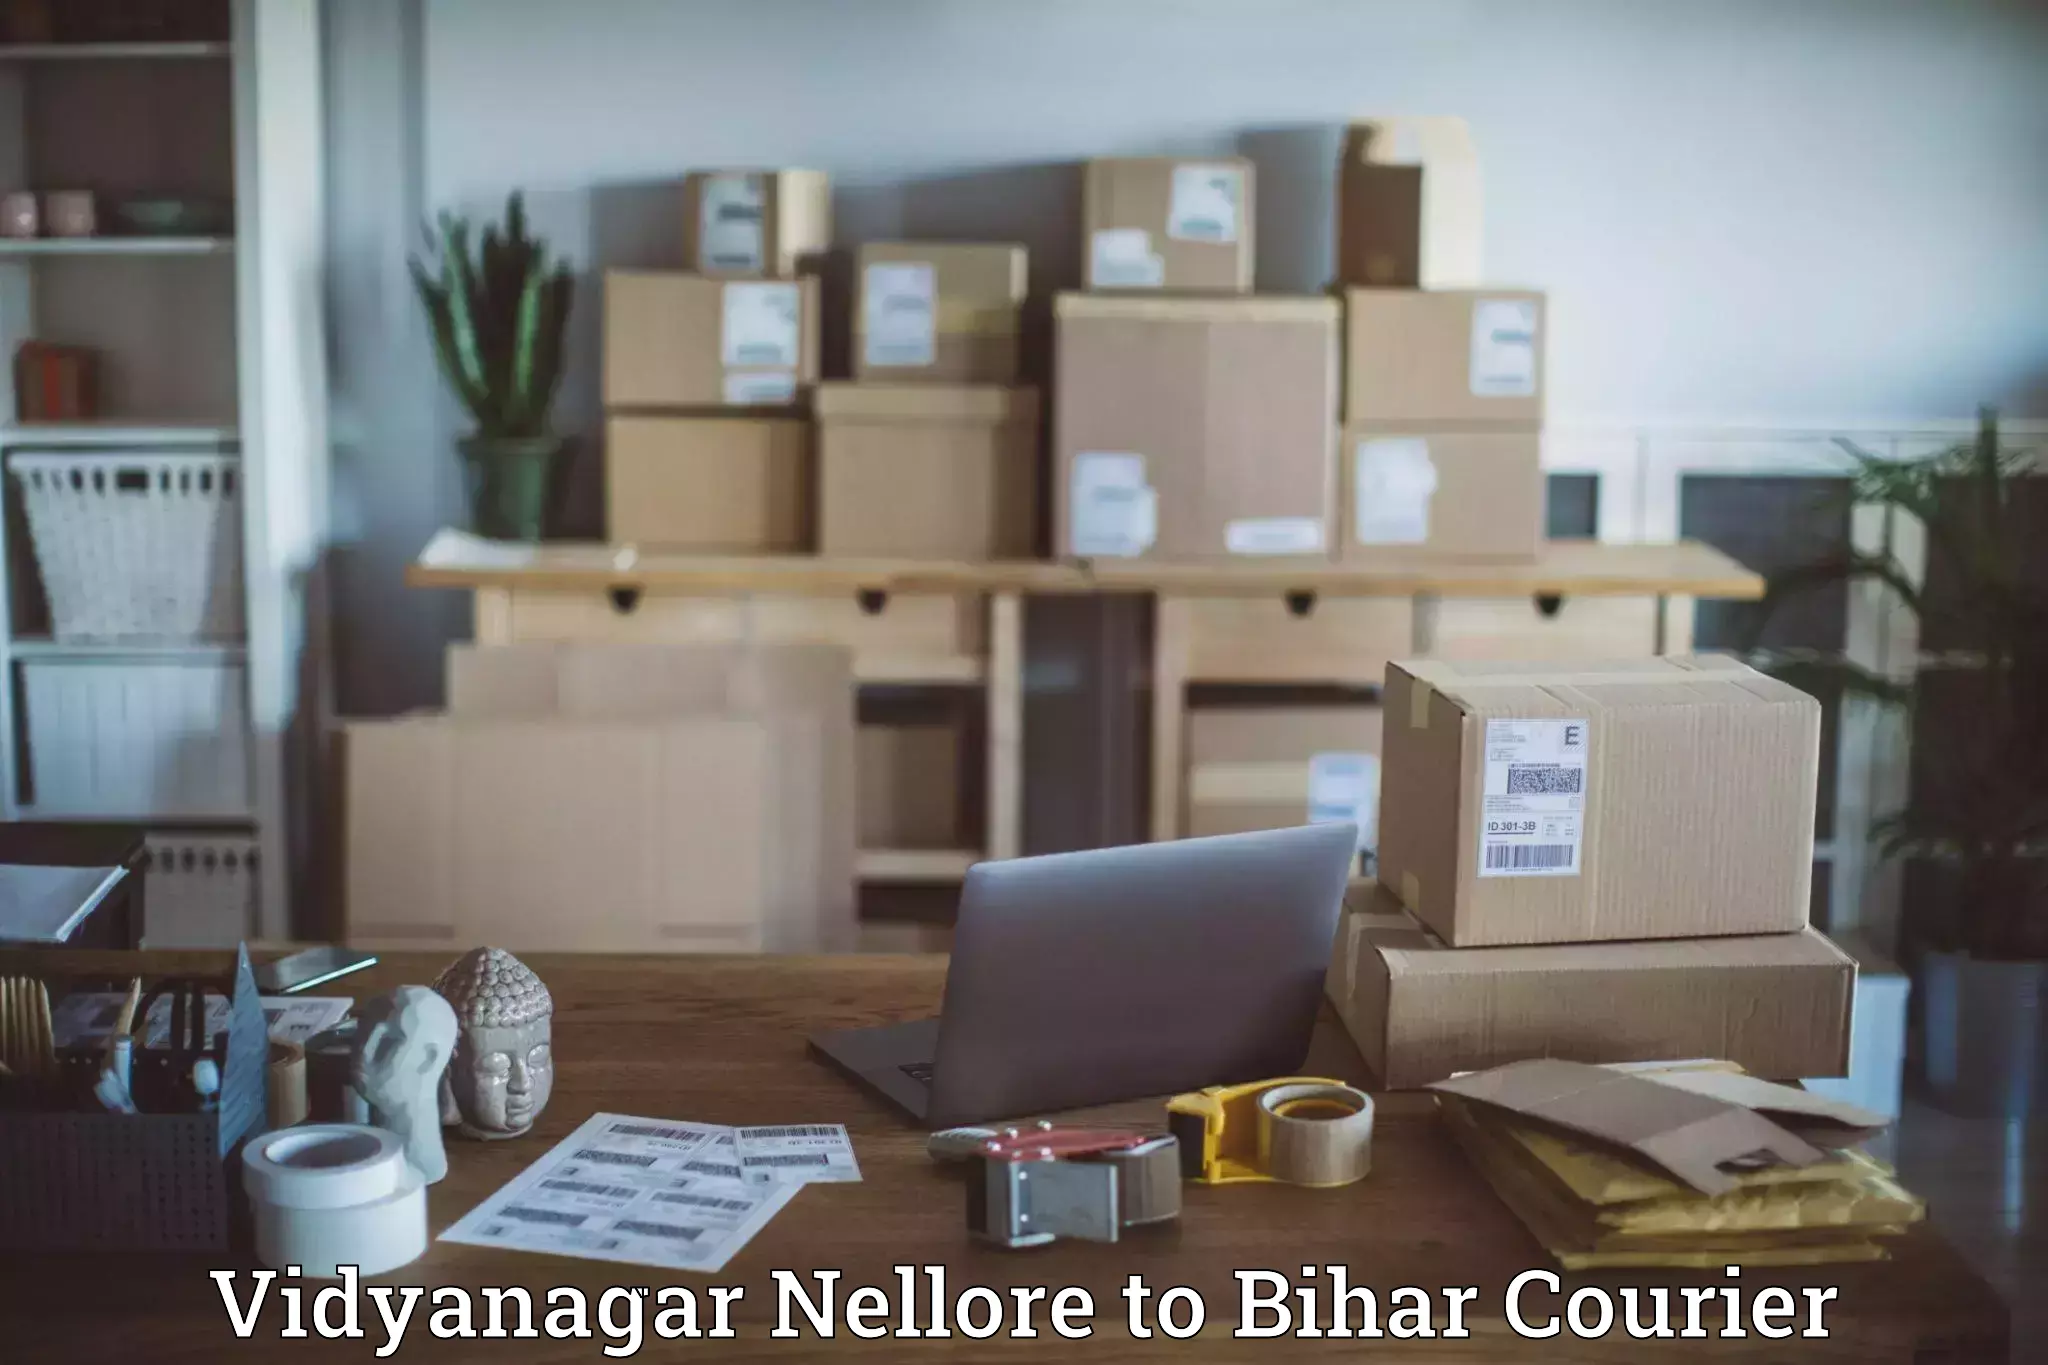 Courier service comparison Vidyanagar Nellore to Bankipore